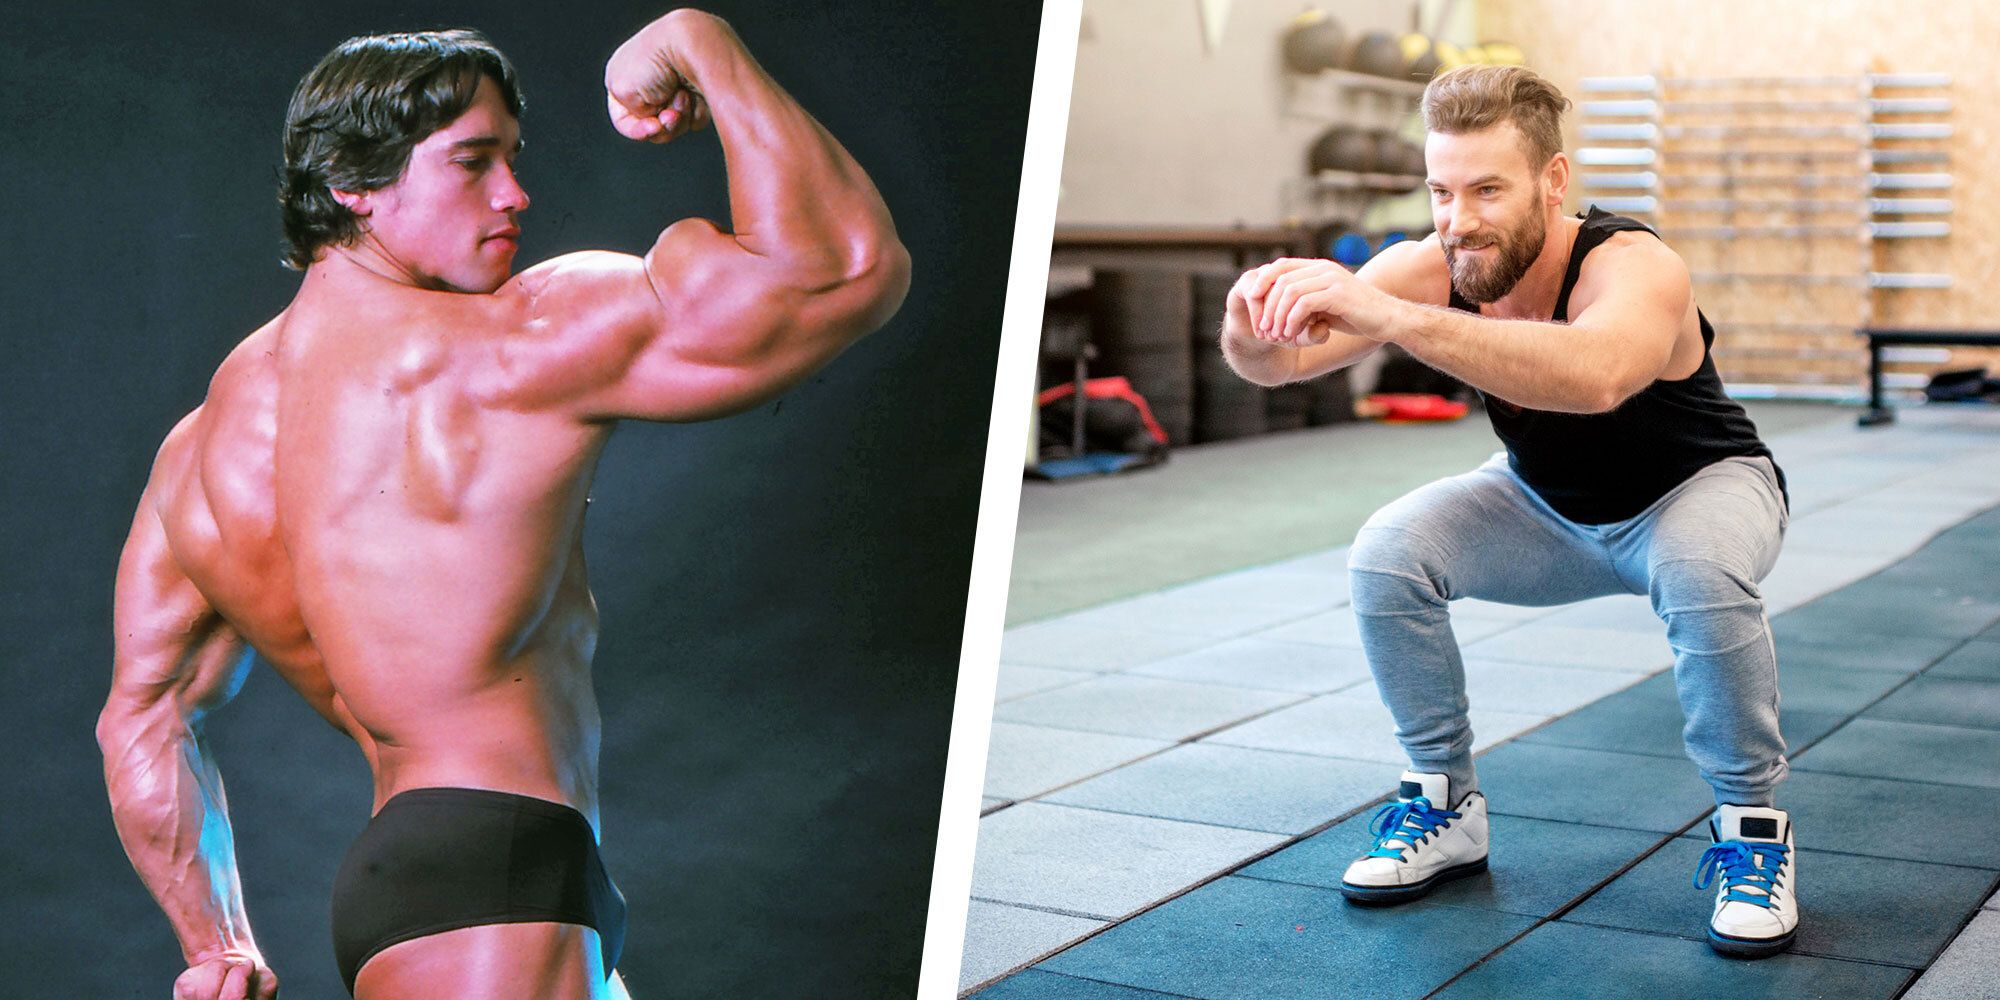 Had Way Better Legs Than Arnold”: Bodybuilding World Picks 'The Myth' Over  Arnold Schwarzenegger As Rare Golden Era Image Goes Viral -  EssentiallySports